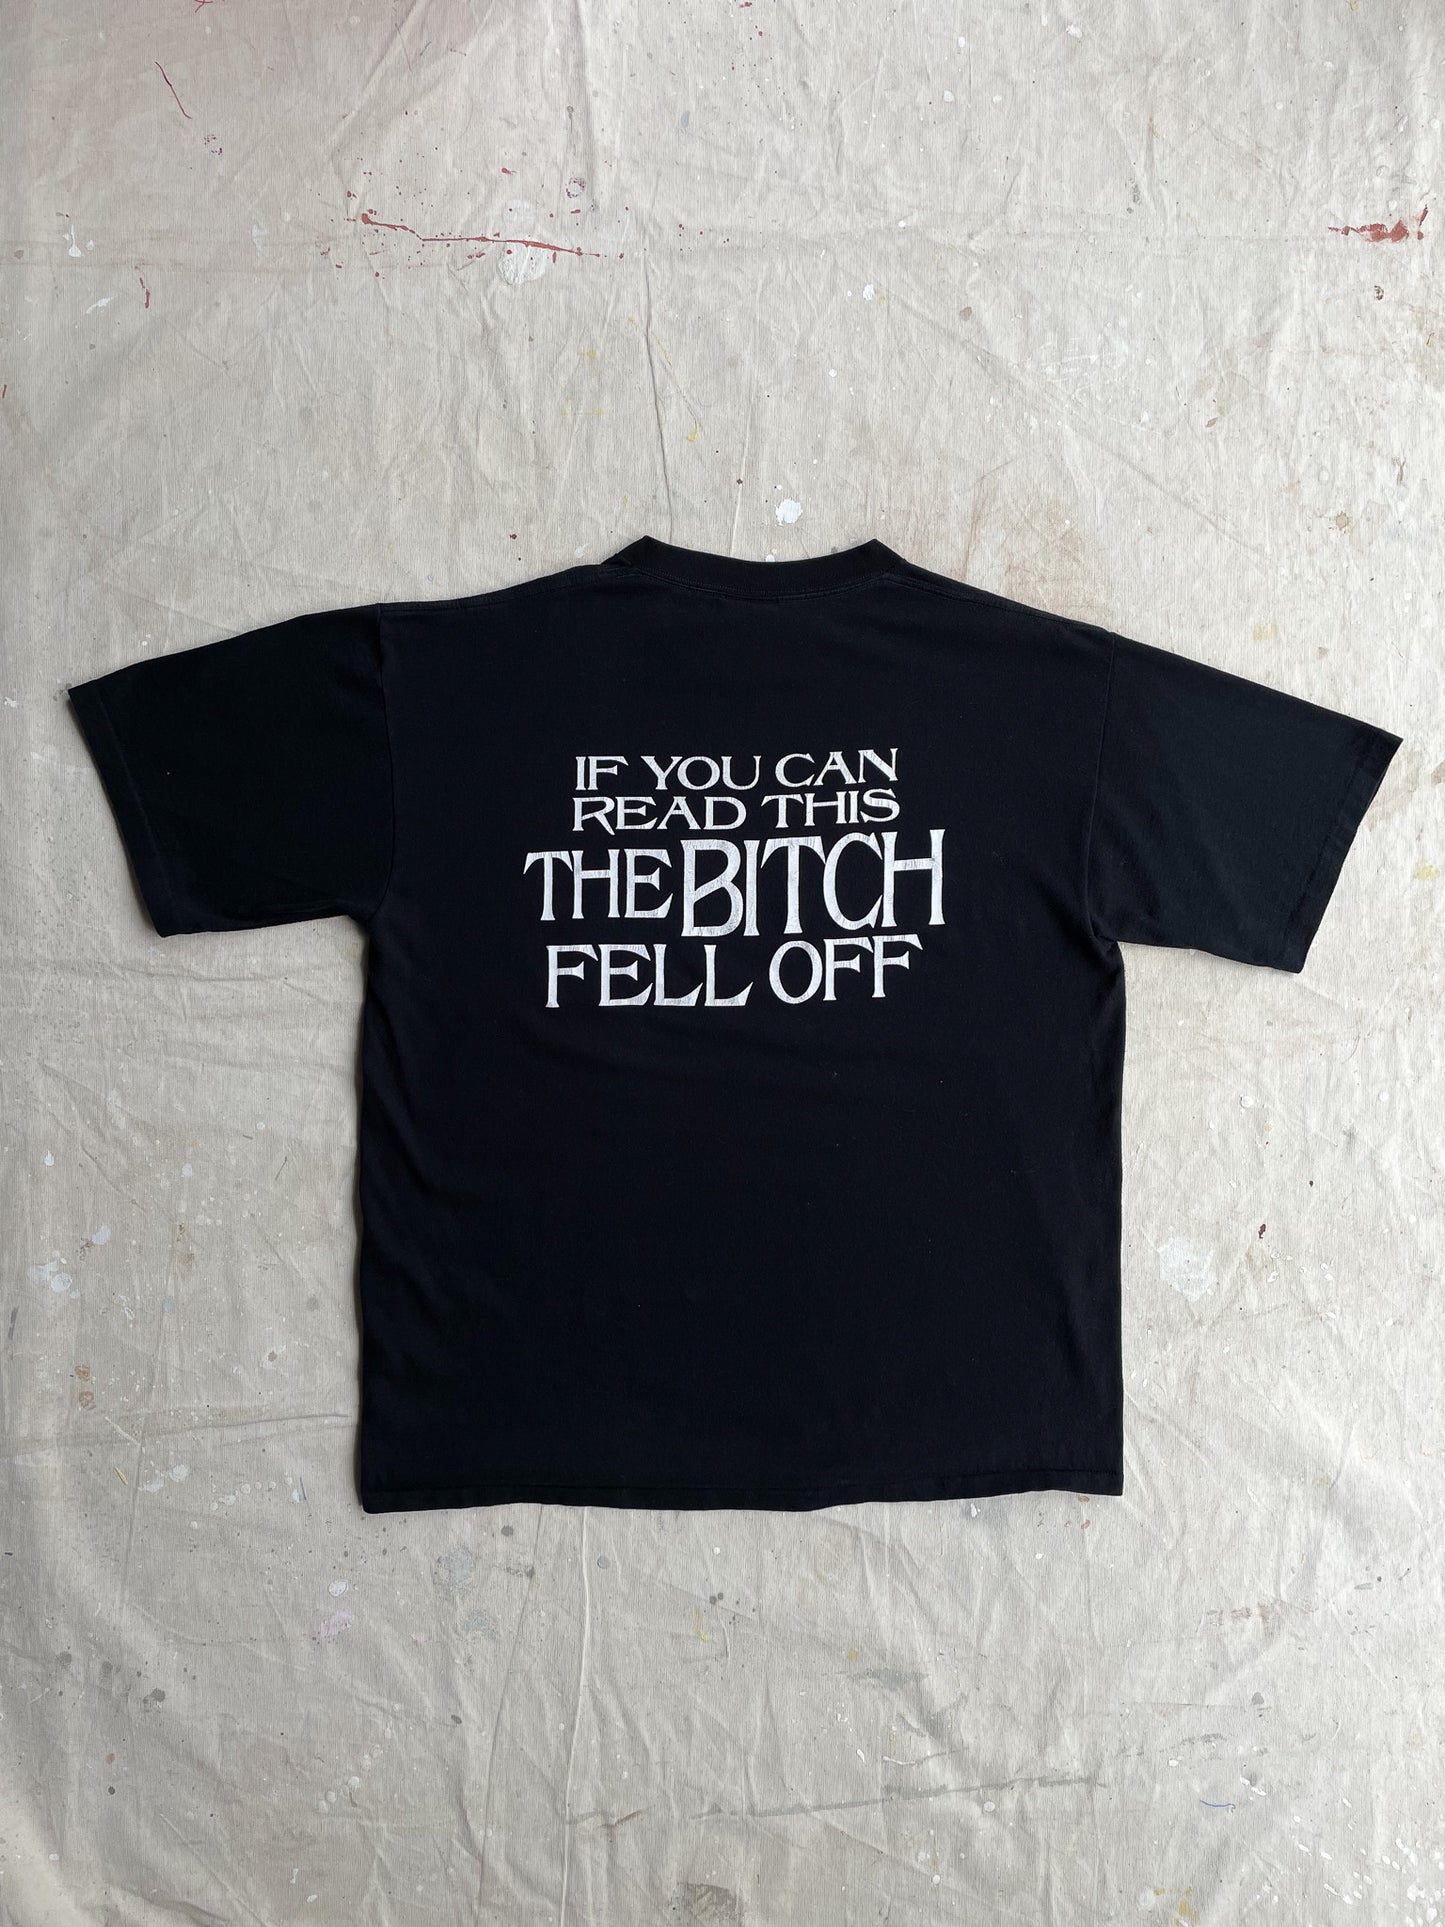 Bitch Fell Off Motorcycle T-Shirt—[XL]